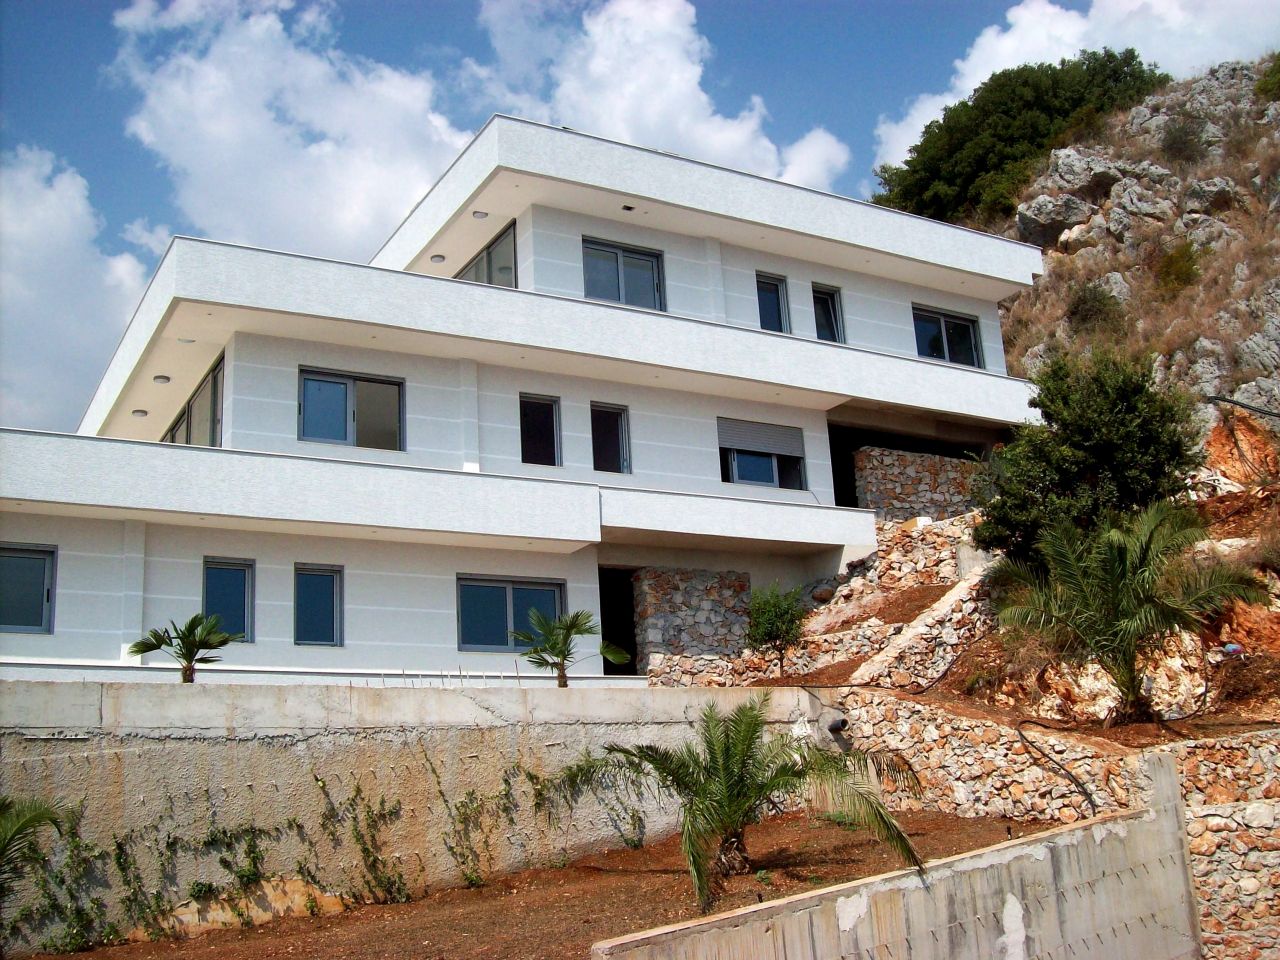 Albania Property for Sale in Dhermi. Brand New Property in Albania Coast